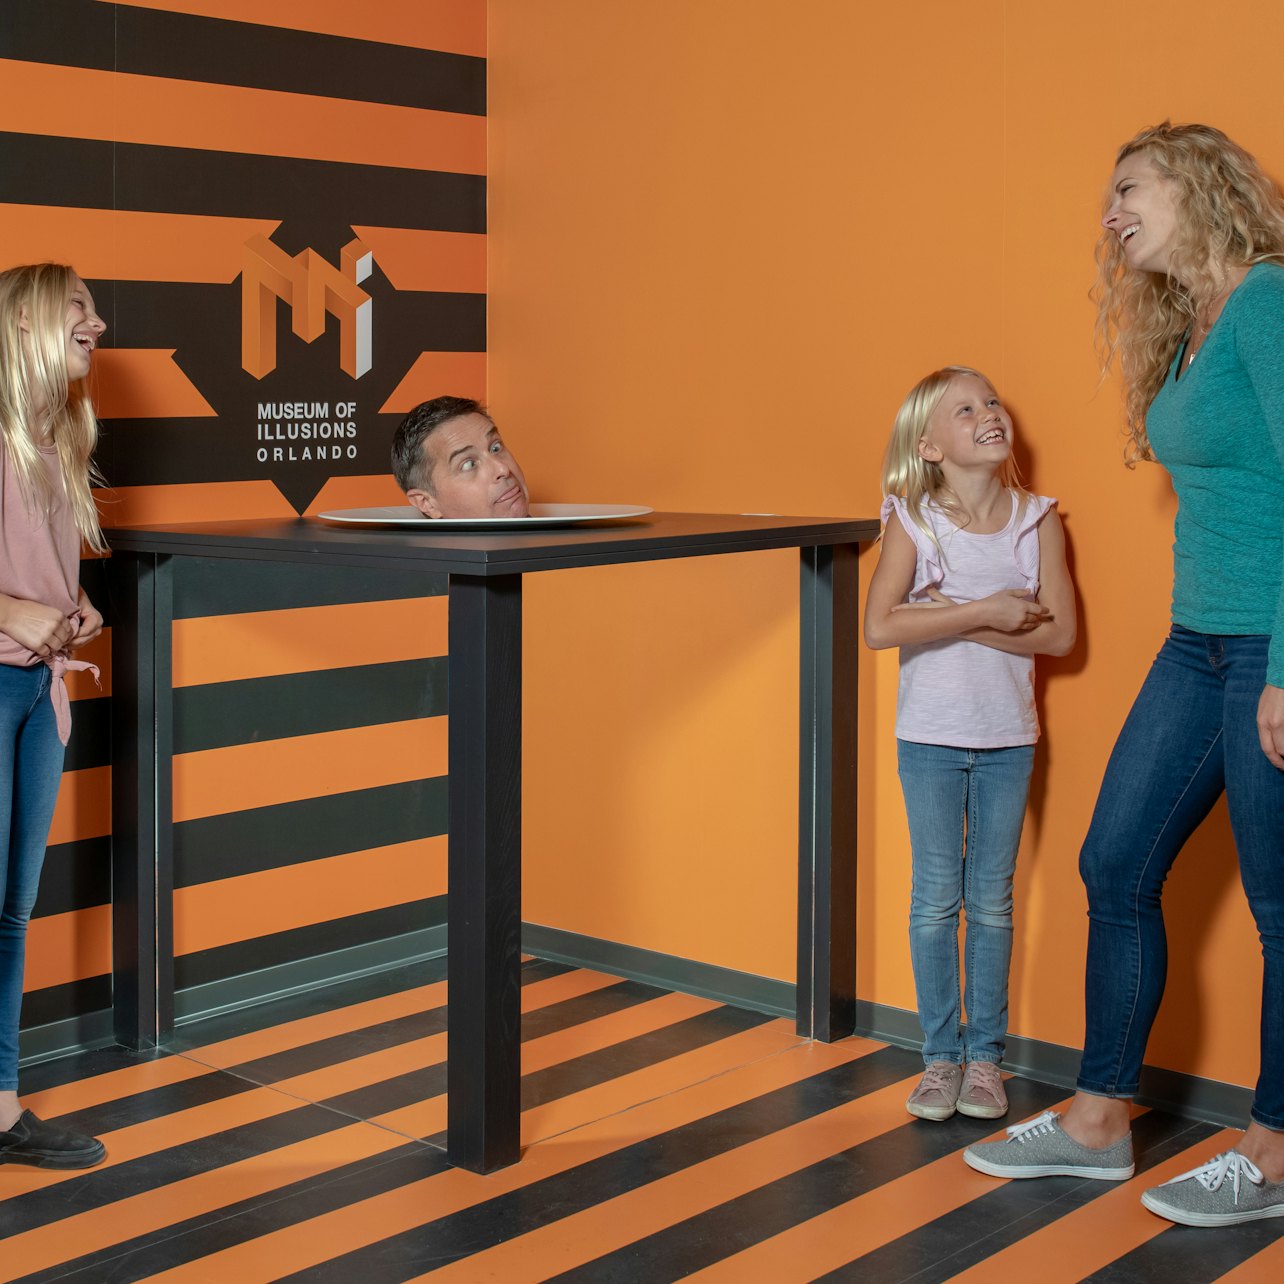 Museum of Illusions Orlando - Accommodations in Orlando